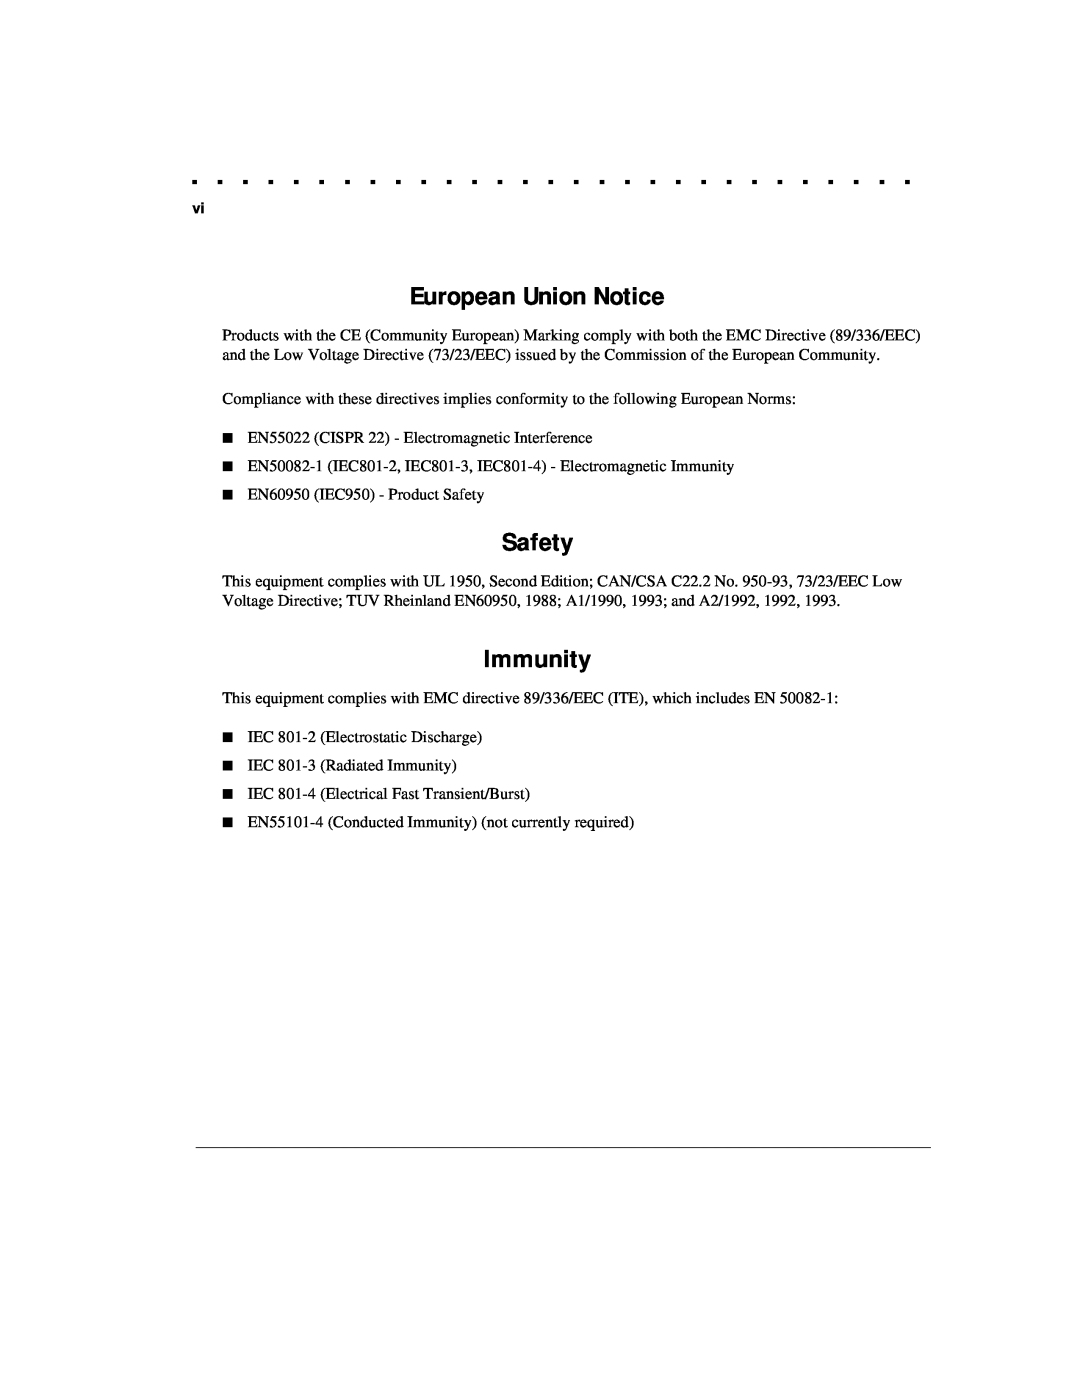 Compaq 1124 manual European Union Notice, Safety, Immunity 